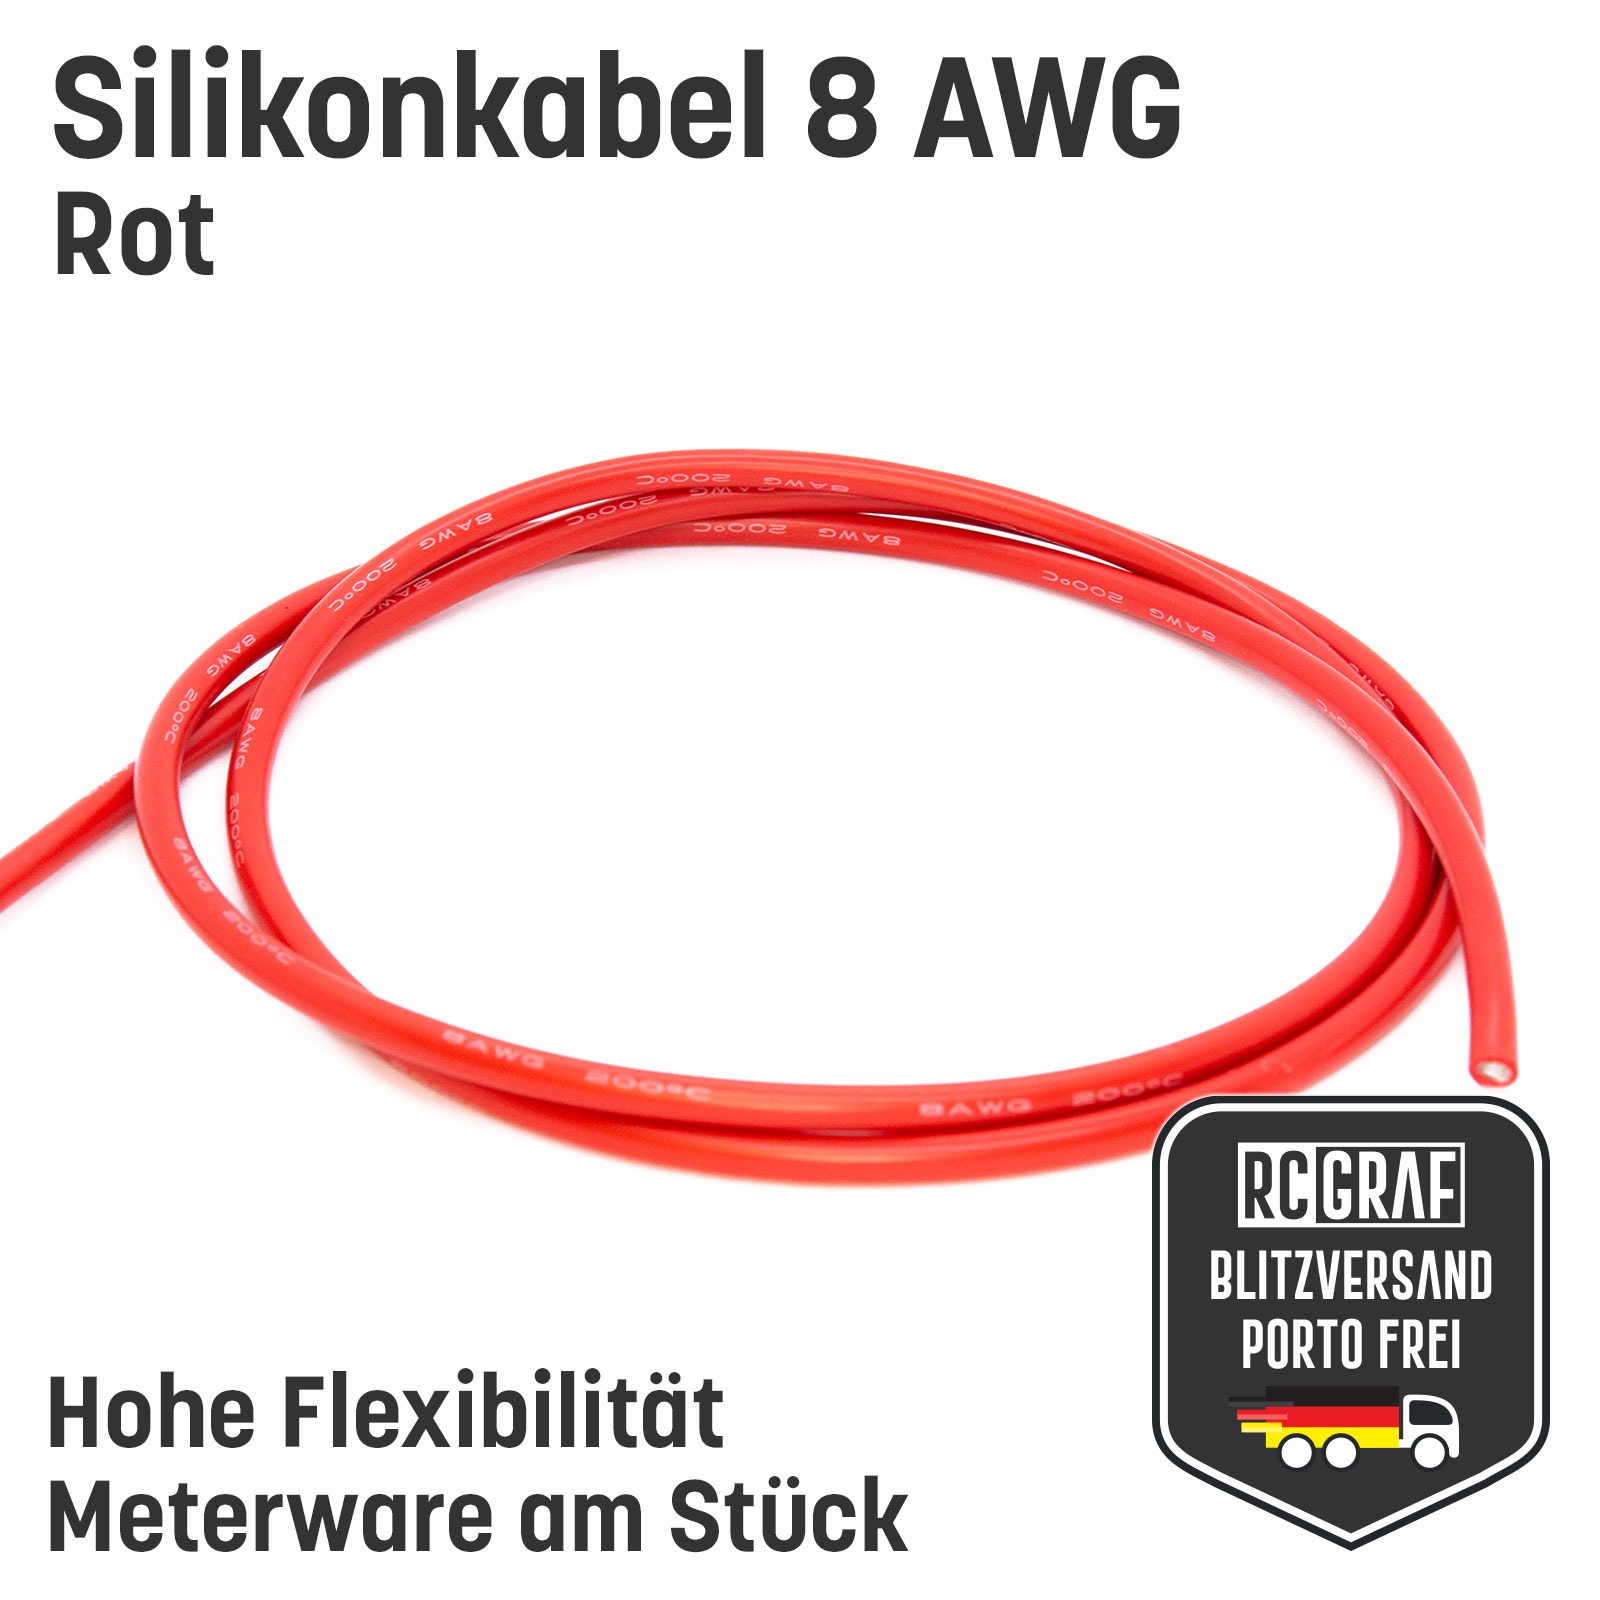 Silikonkabel 8 AWG hochflexibel Rot Schwarz Kupfer RC Kabel 3